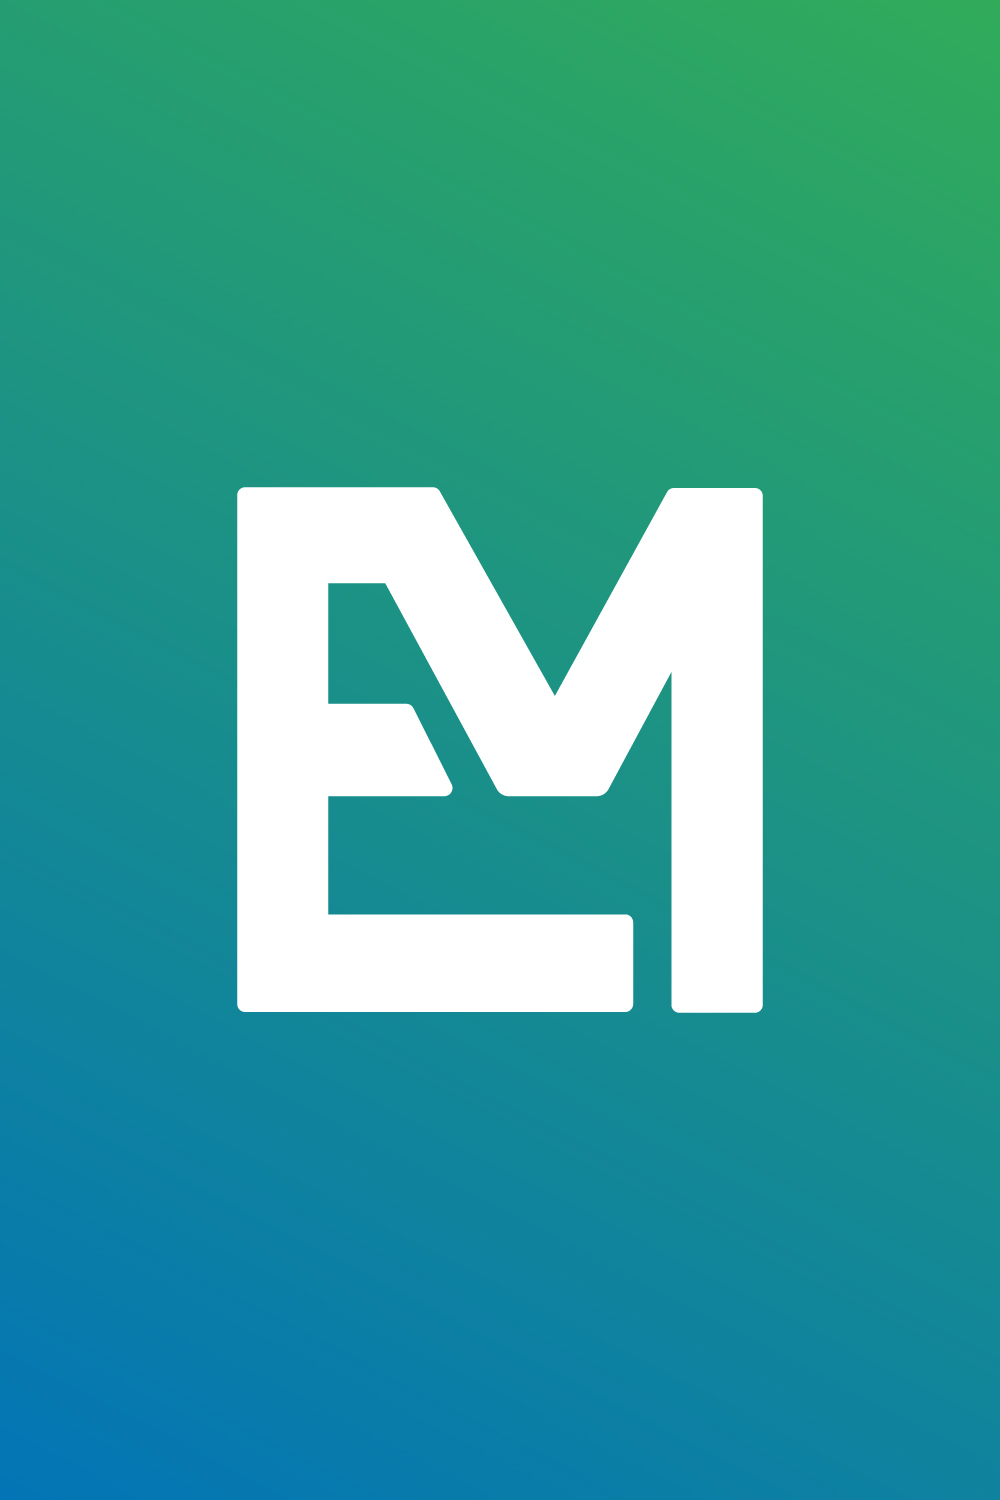 EM logo design pinterest preview image.